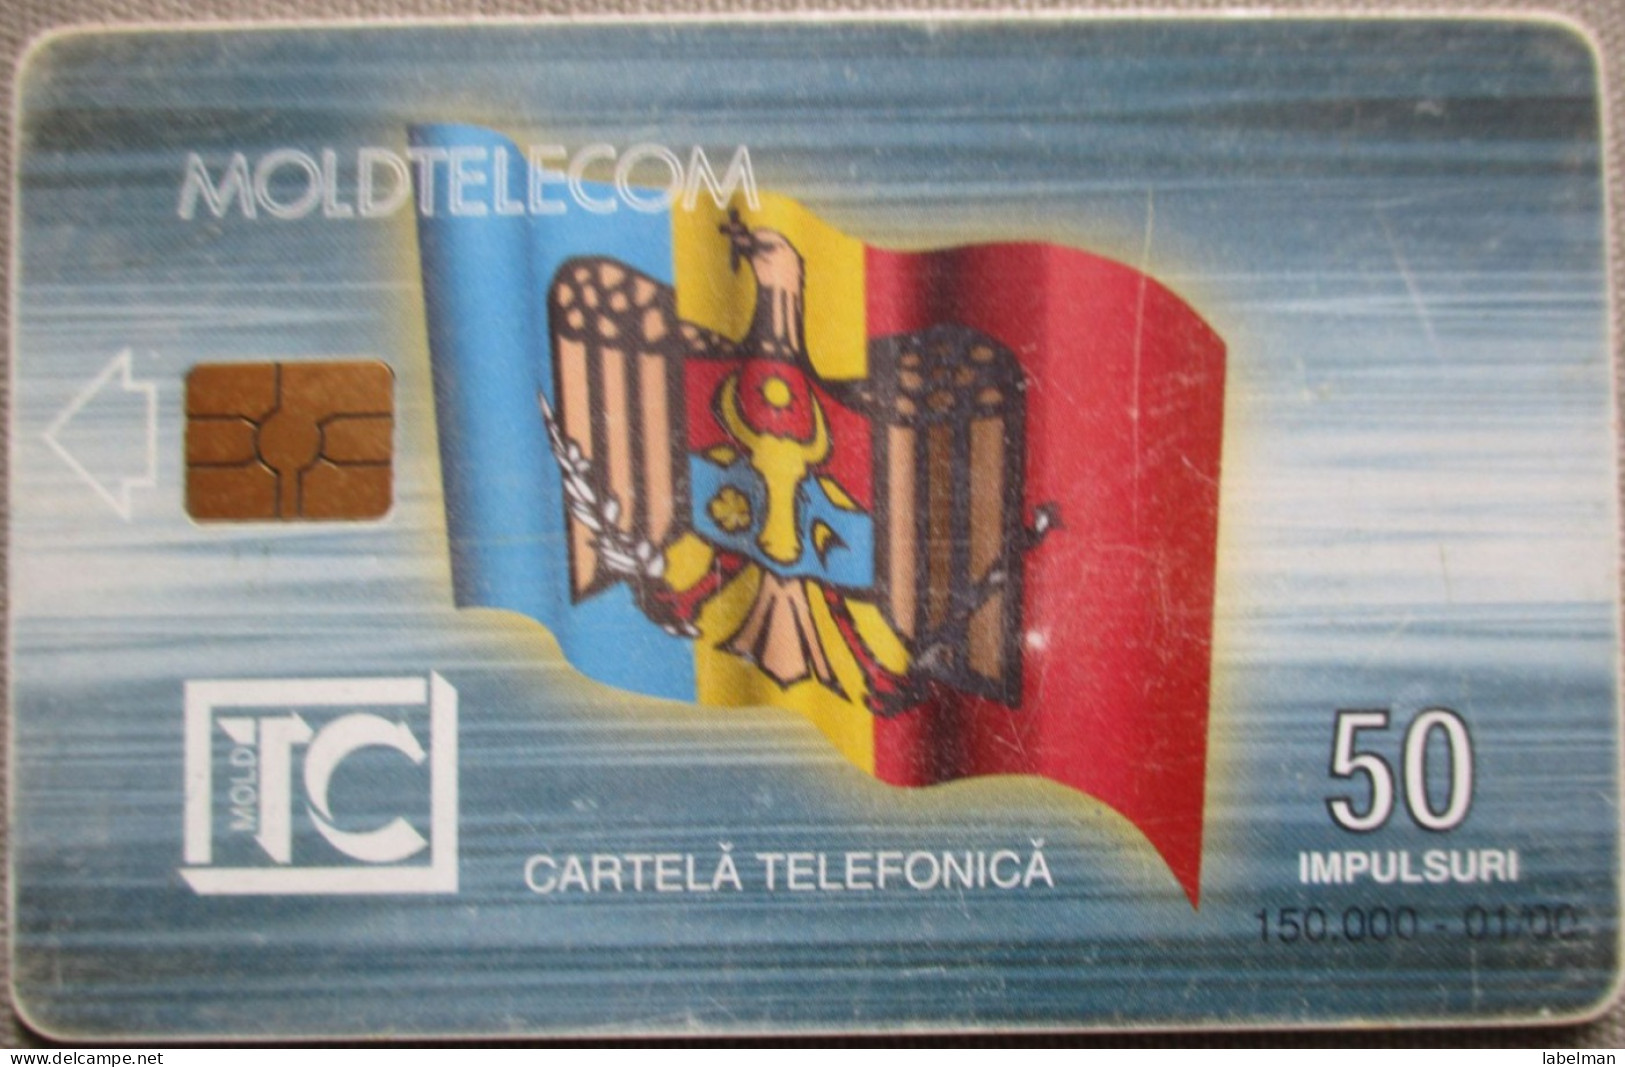 MOLDOVA MOLDTELECOM TELEPHONE PHONE TELEFONWERTKARTE PHONECARD CARTELA CARD CARTE KARTE COLLECTOR BEZEQ 50 UNITS - Moldavië